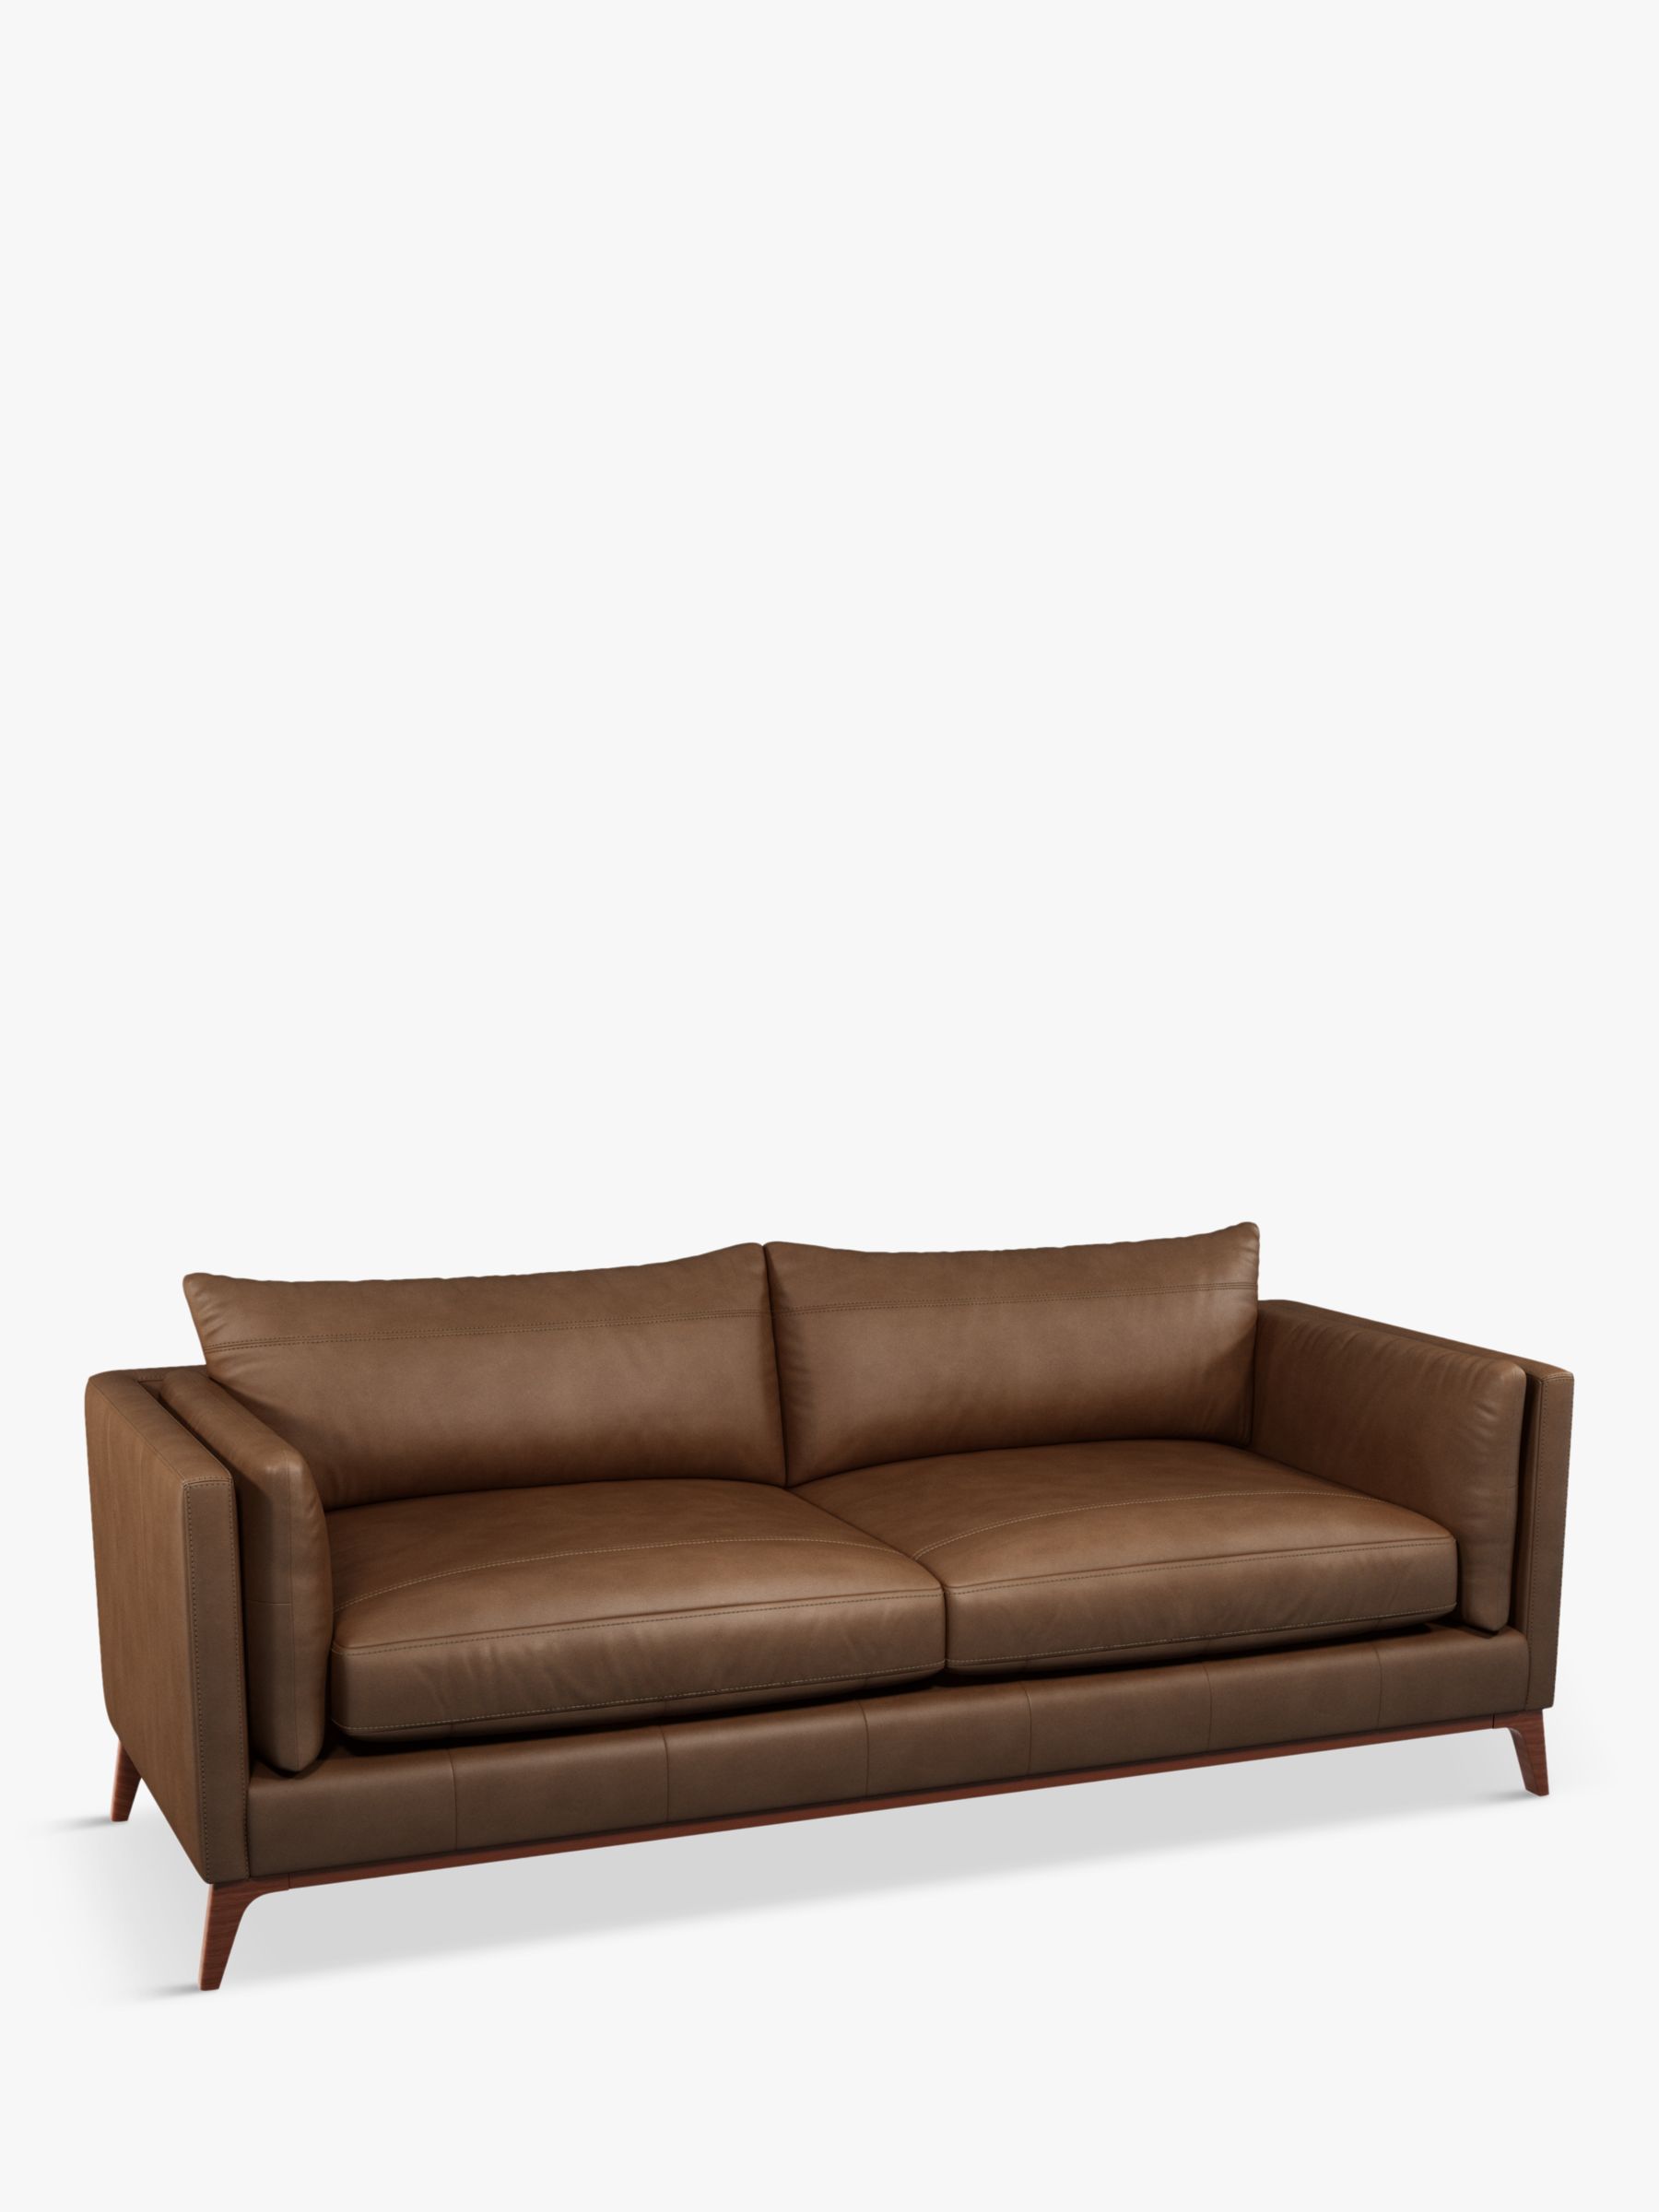 John Lewis Trim Grand 4 Seater Leather Sofa, Dark Leg